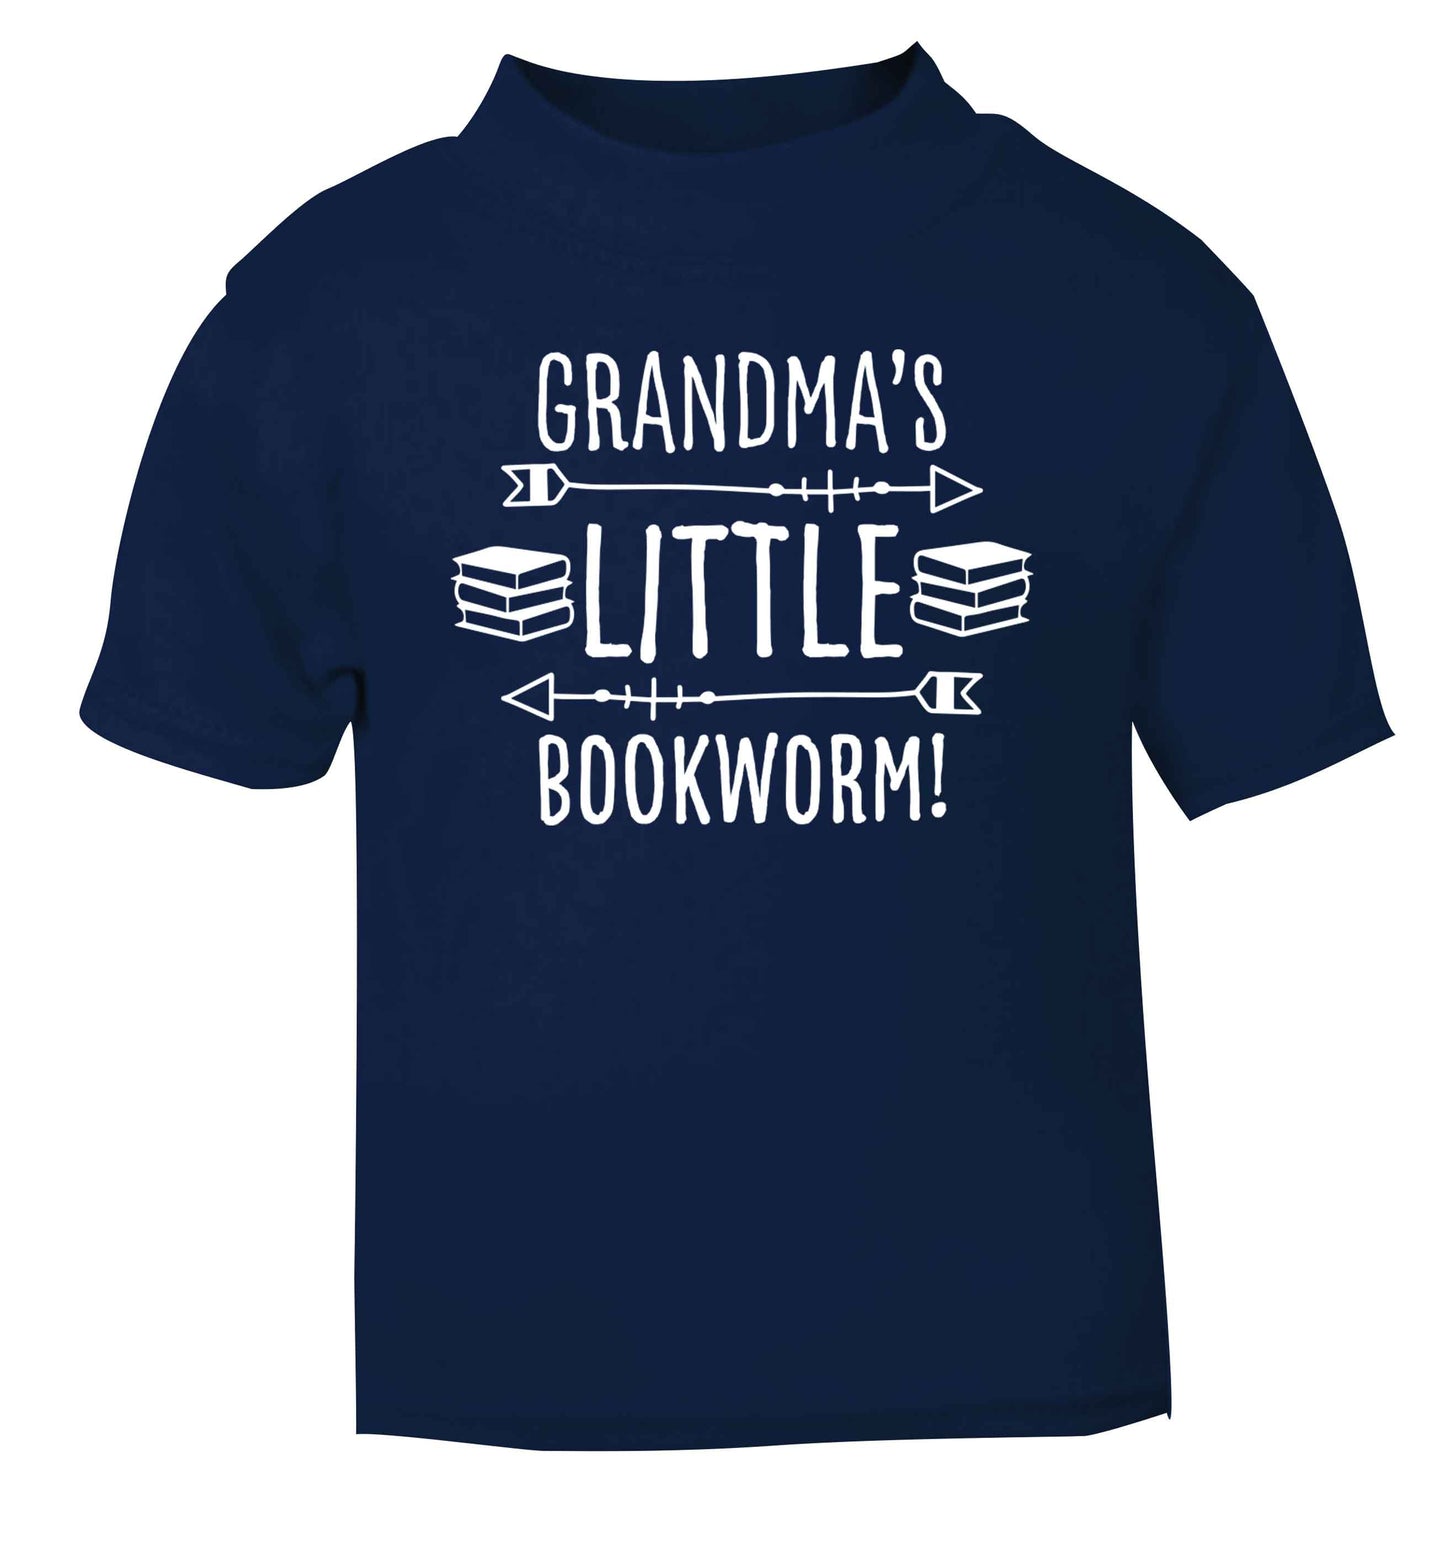 Grandma's little bookworm navy baby toddler Tshirt 2 Years